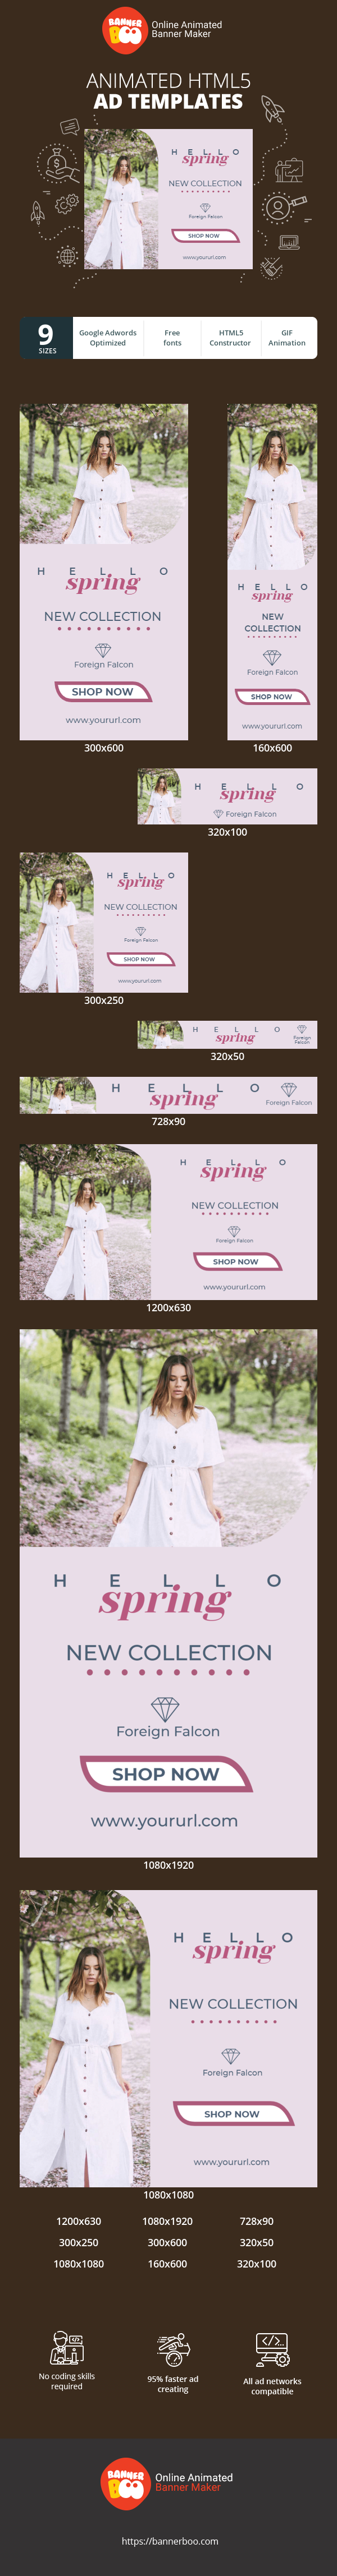 Шаблон рекламного банера — Hello Spring — New Fashion Collection